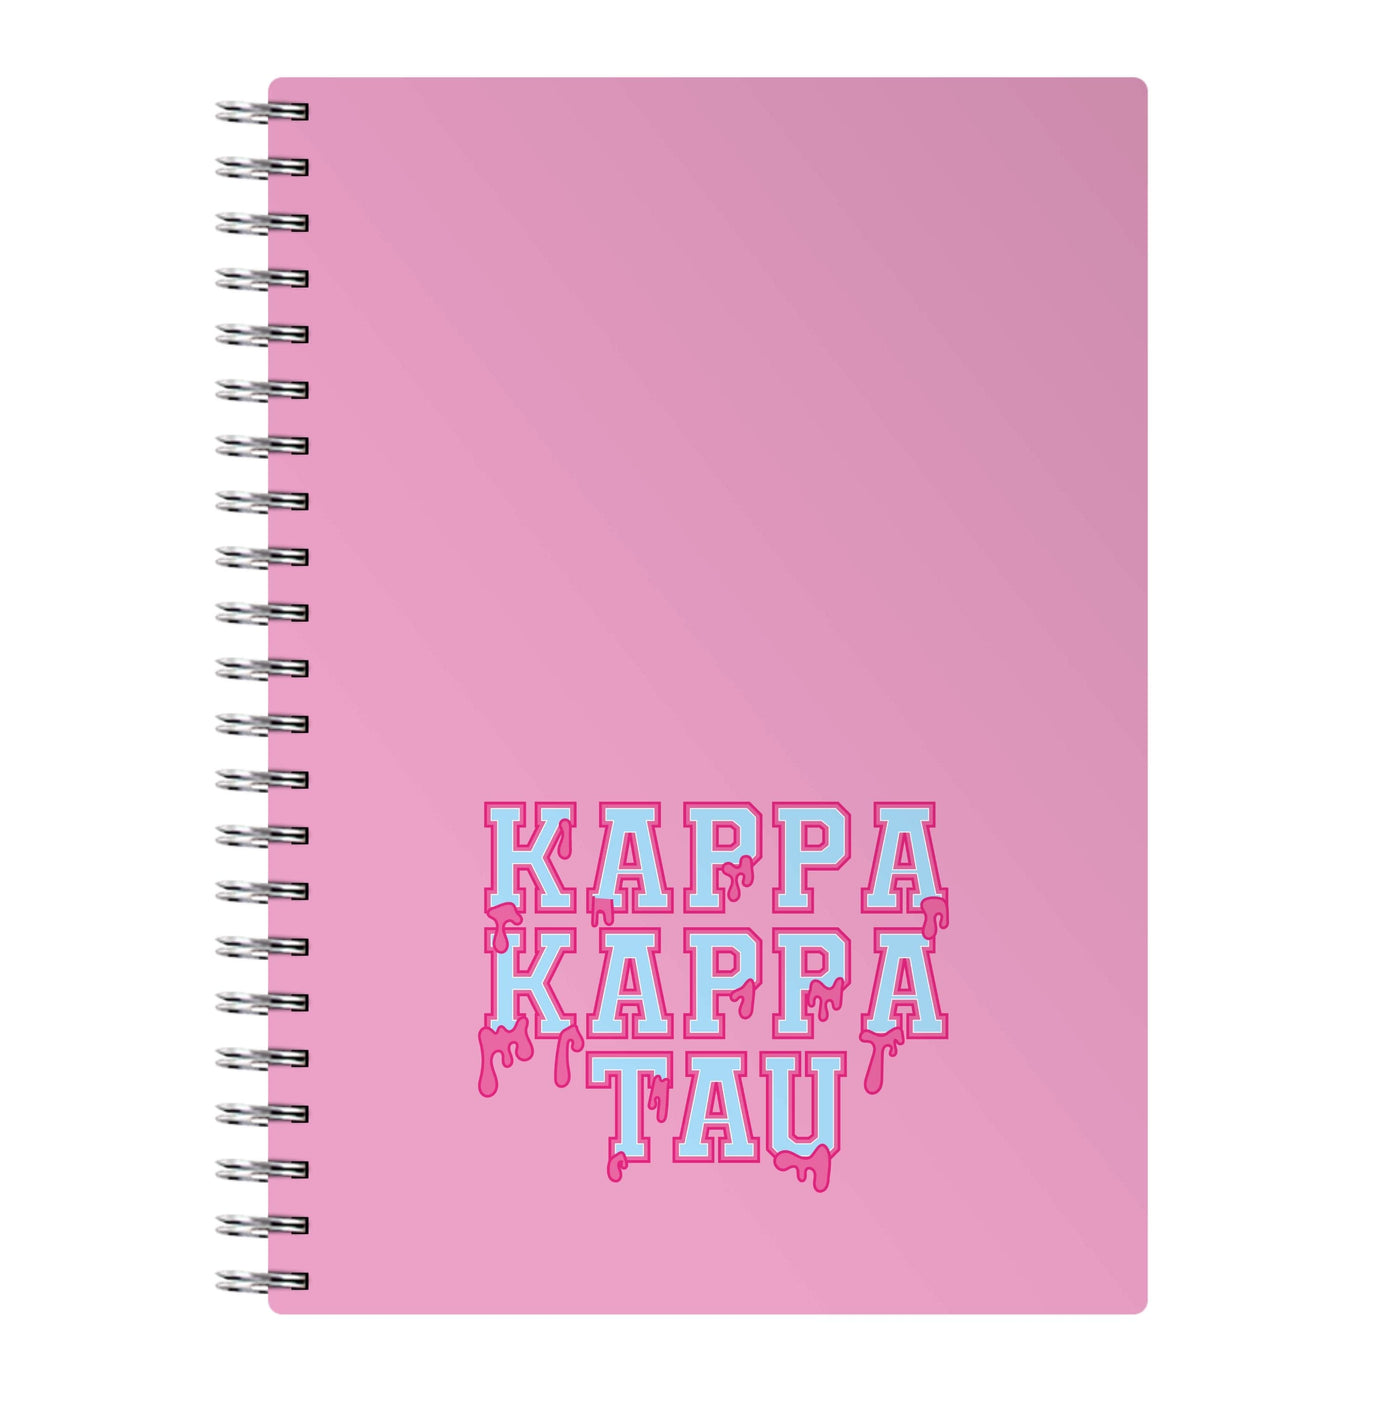 Kappa Kappa Tau - Scream Queens Notebook